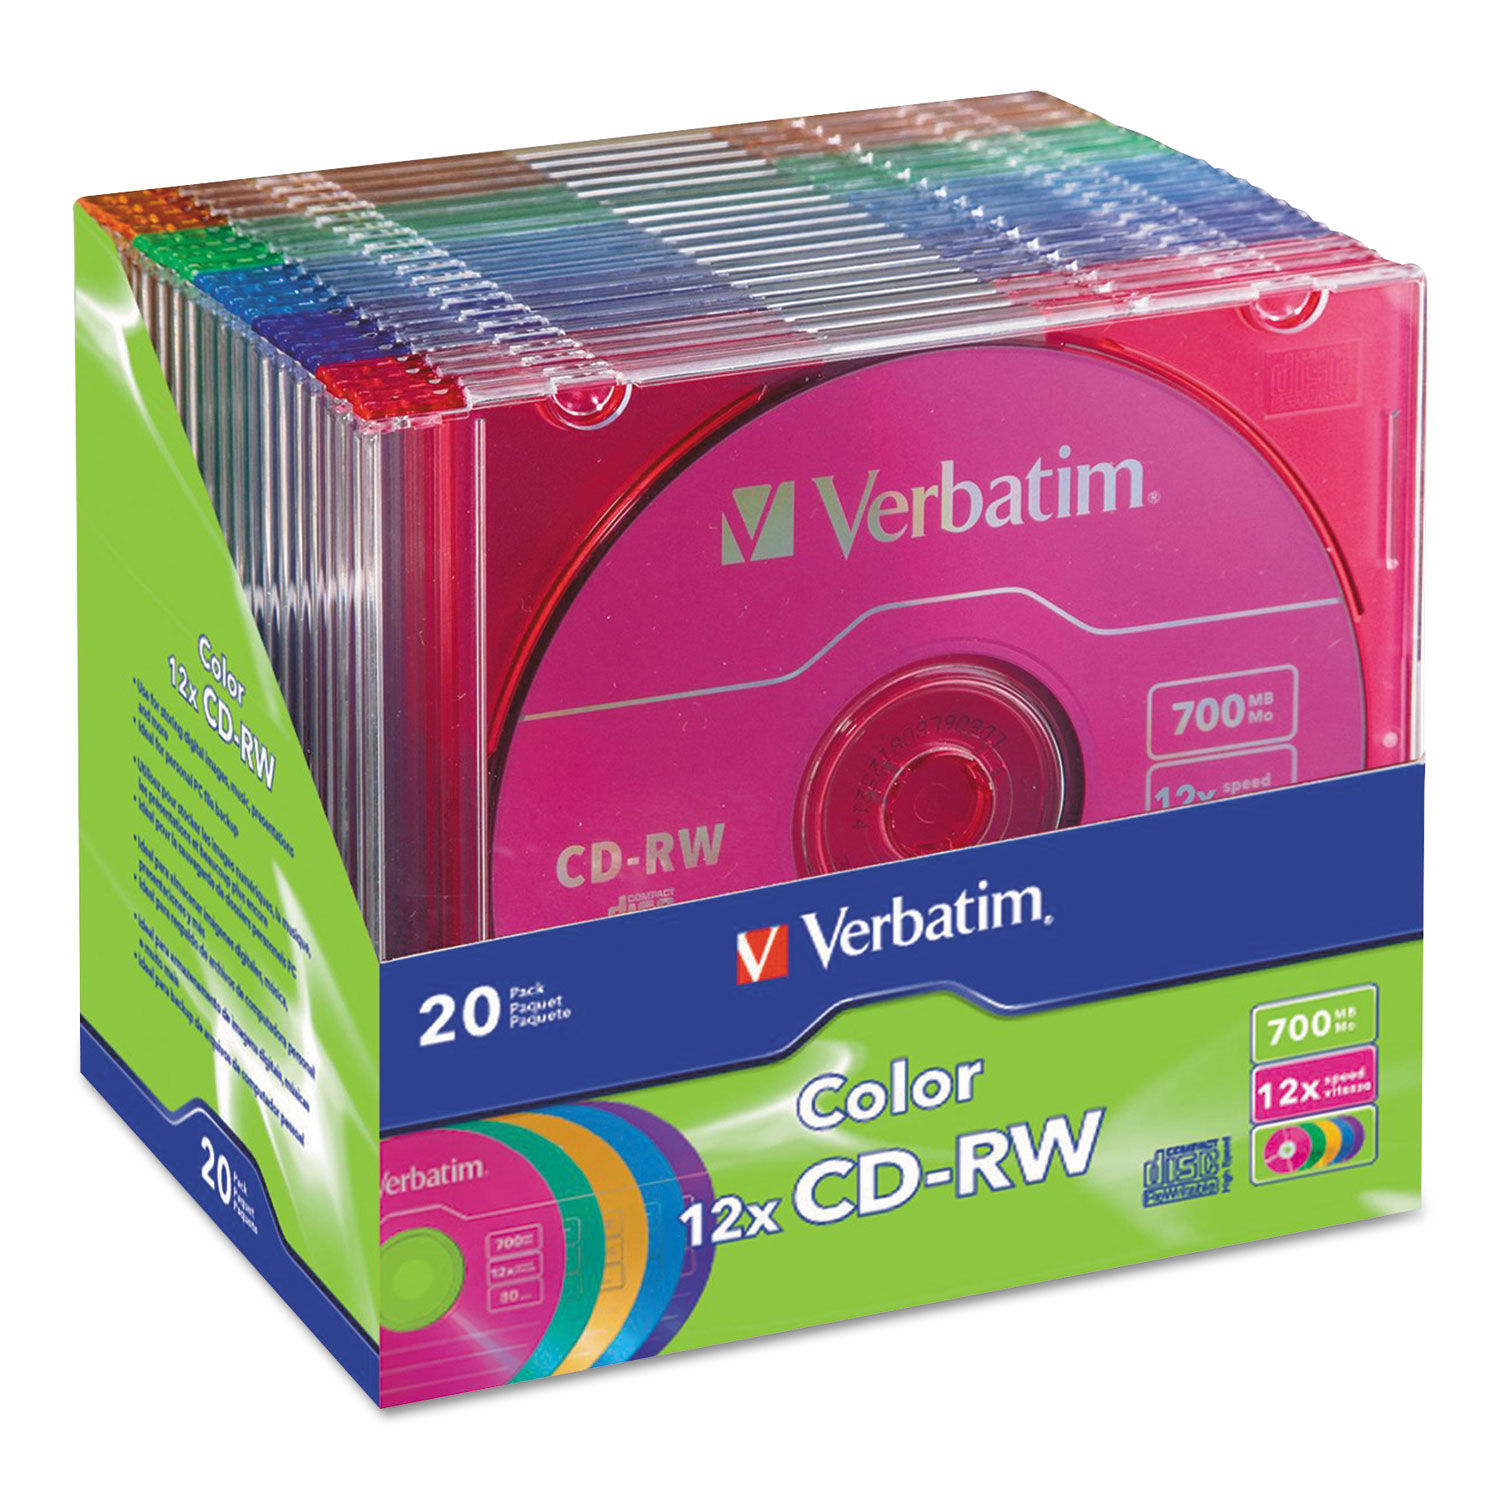 Cd Rw High Speed Rewritable Disc By Verbatim® Ver96685